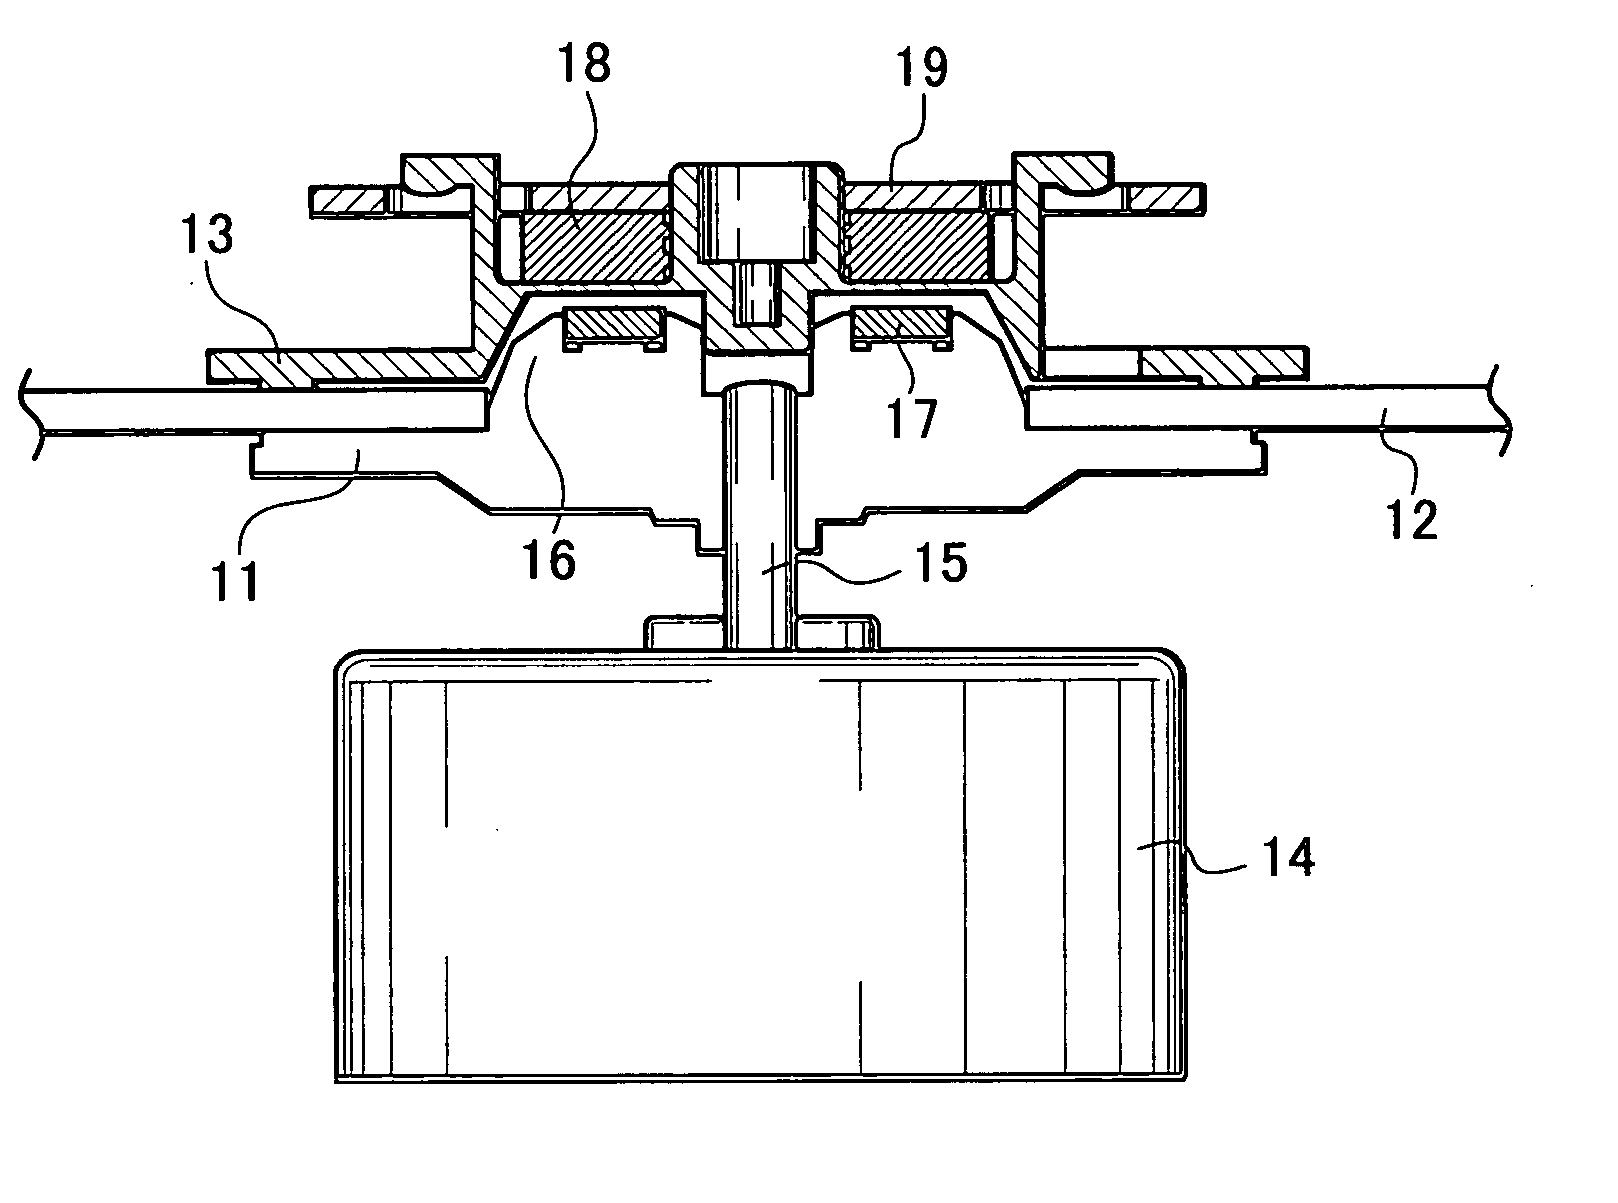 Disk device having clamp mechanism